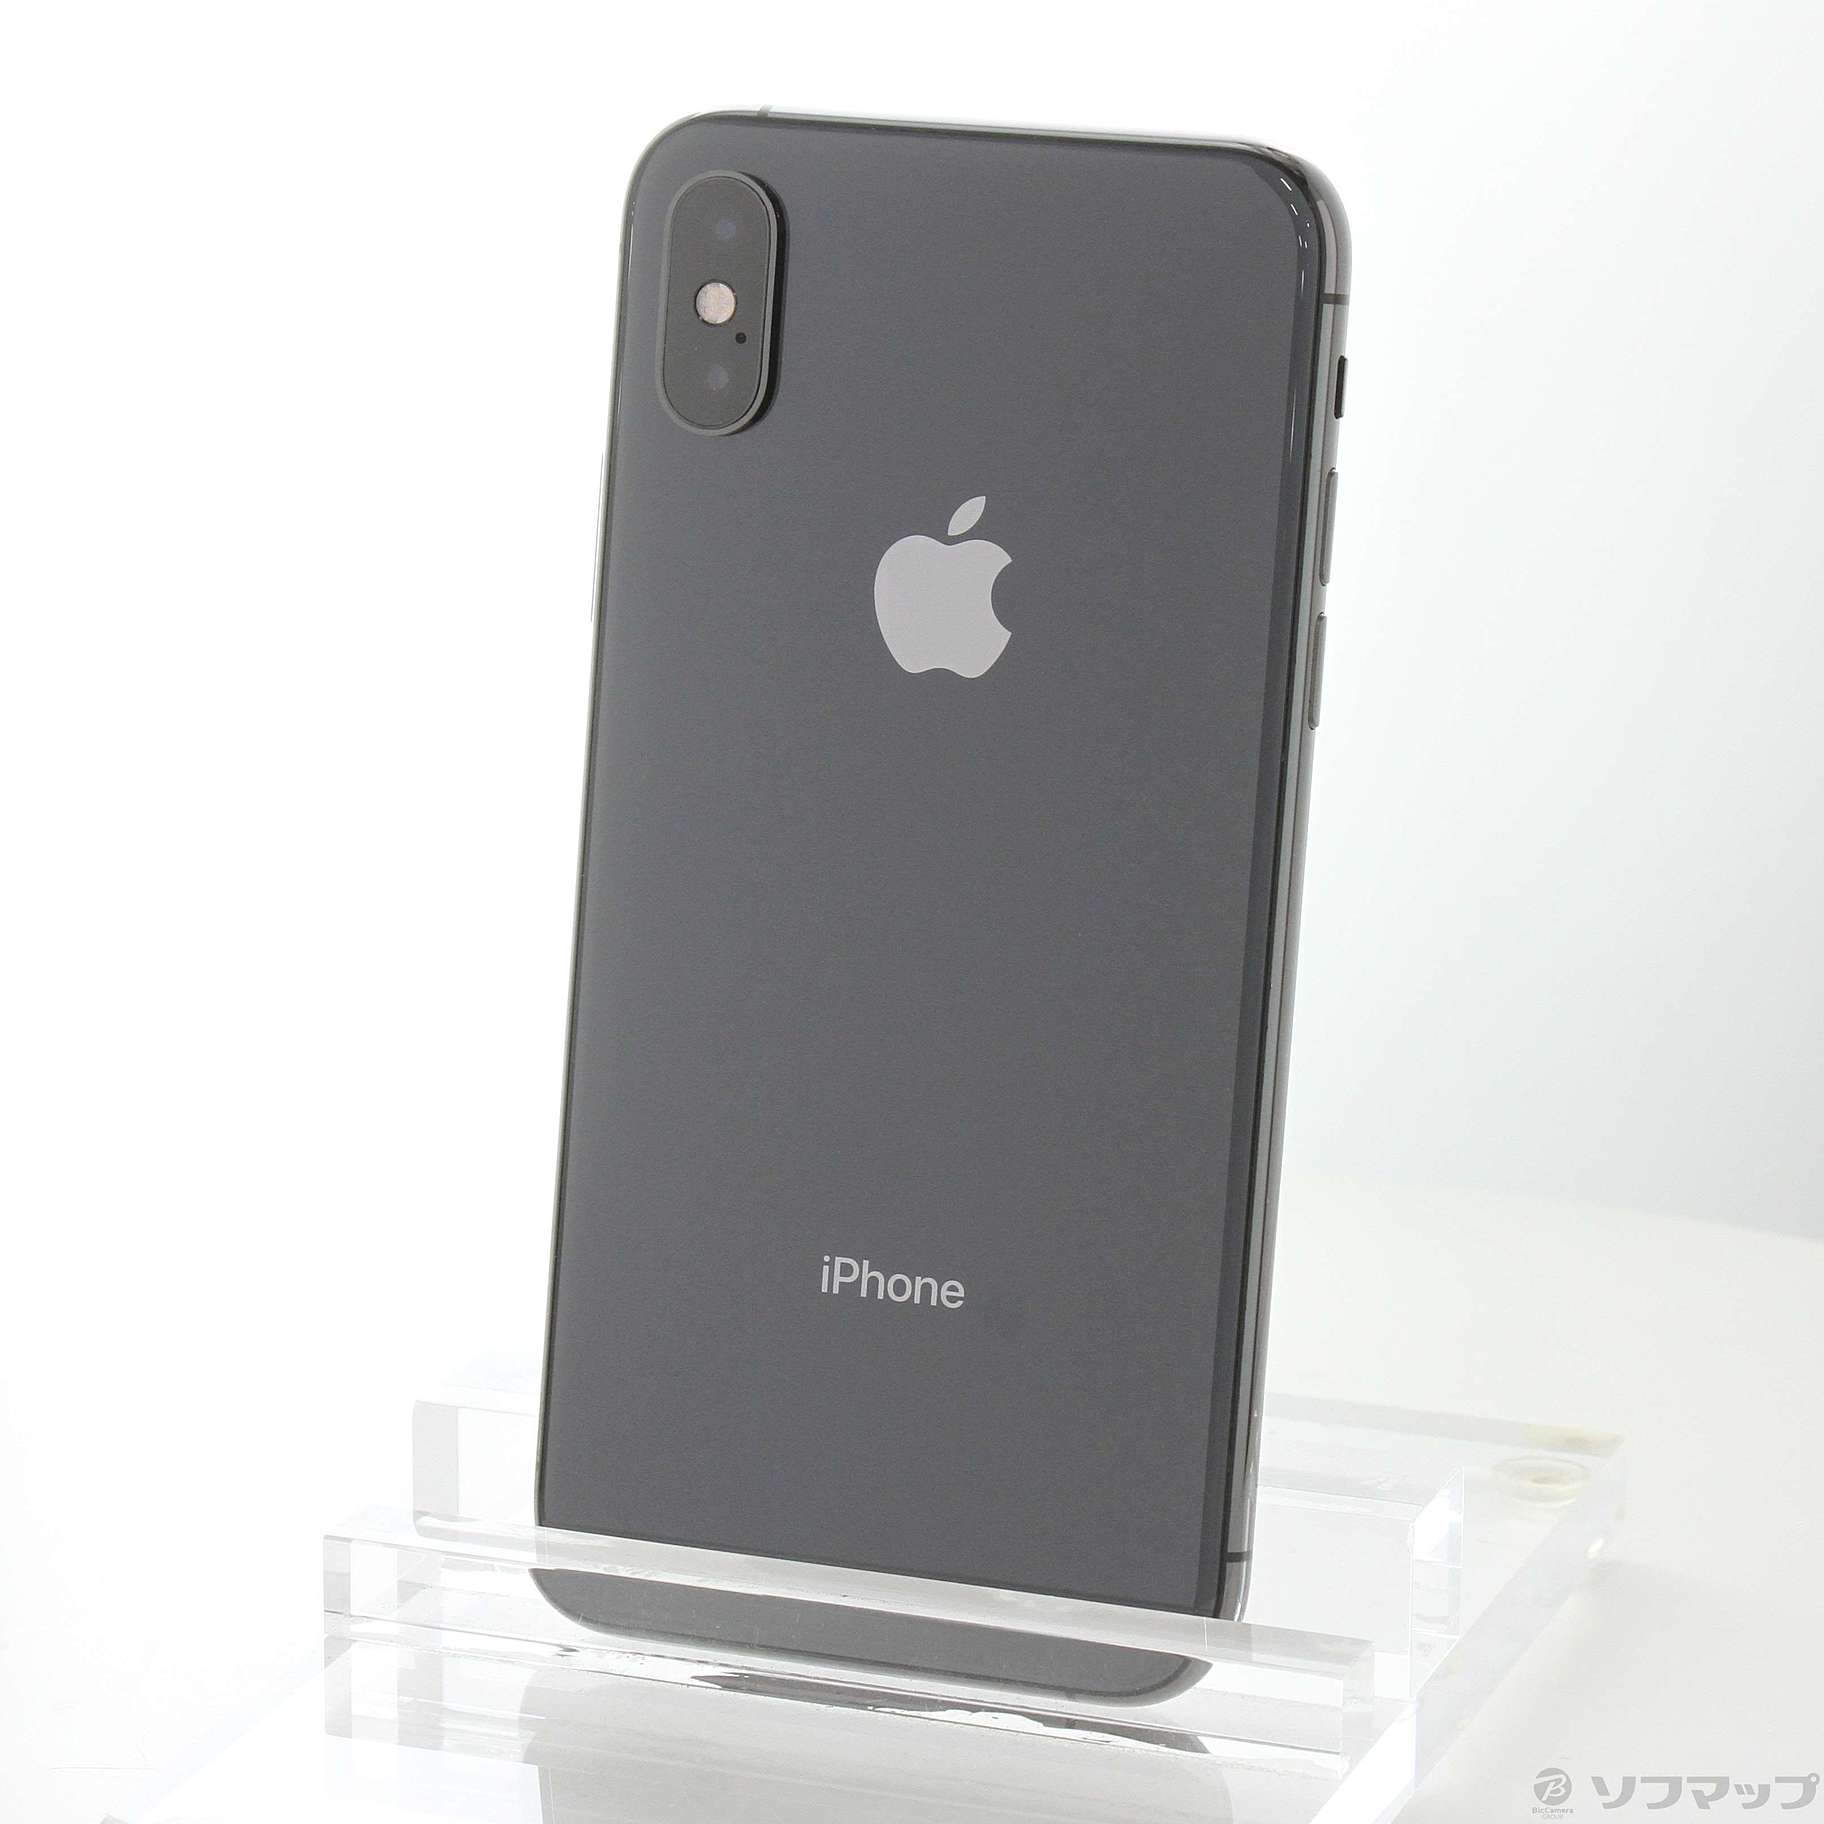 iPhoneiPhoneXs スペースグレー64GB SIMフリー